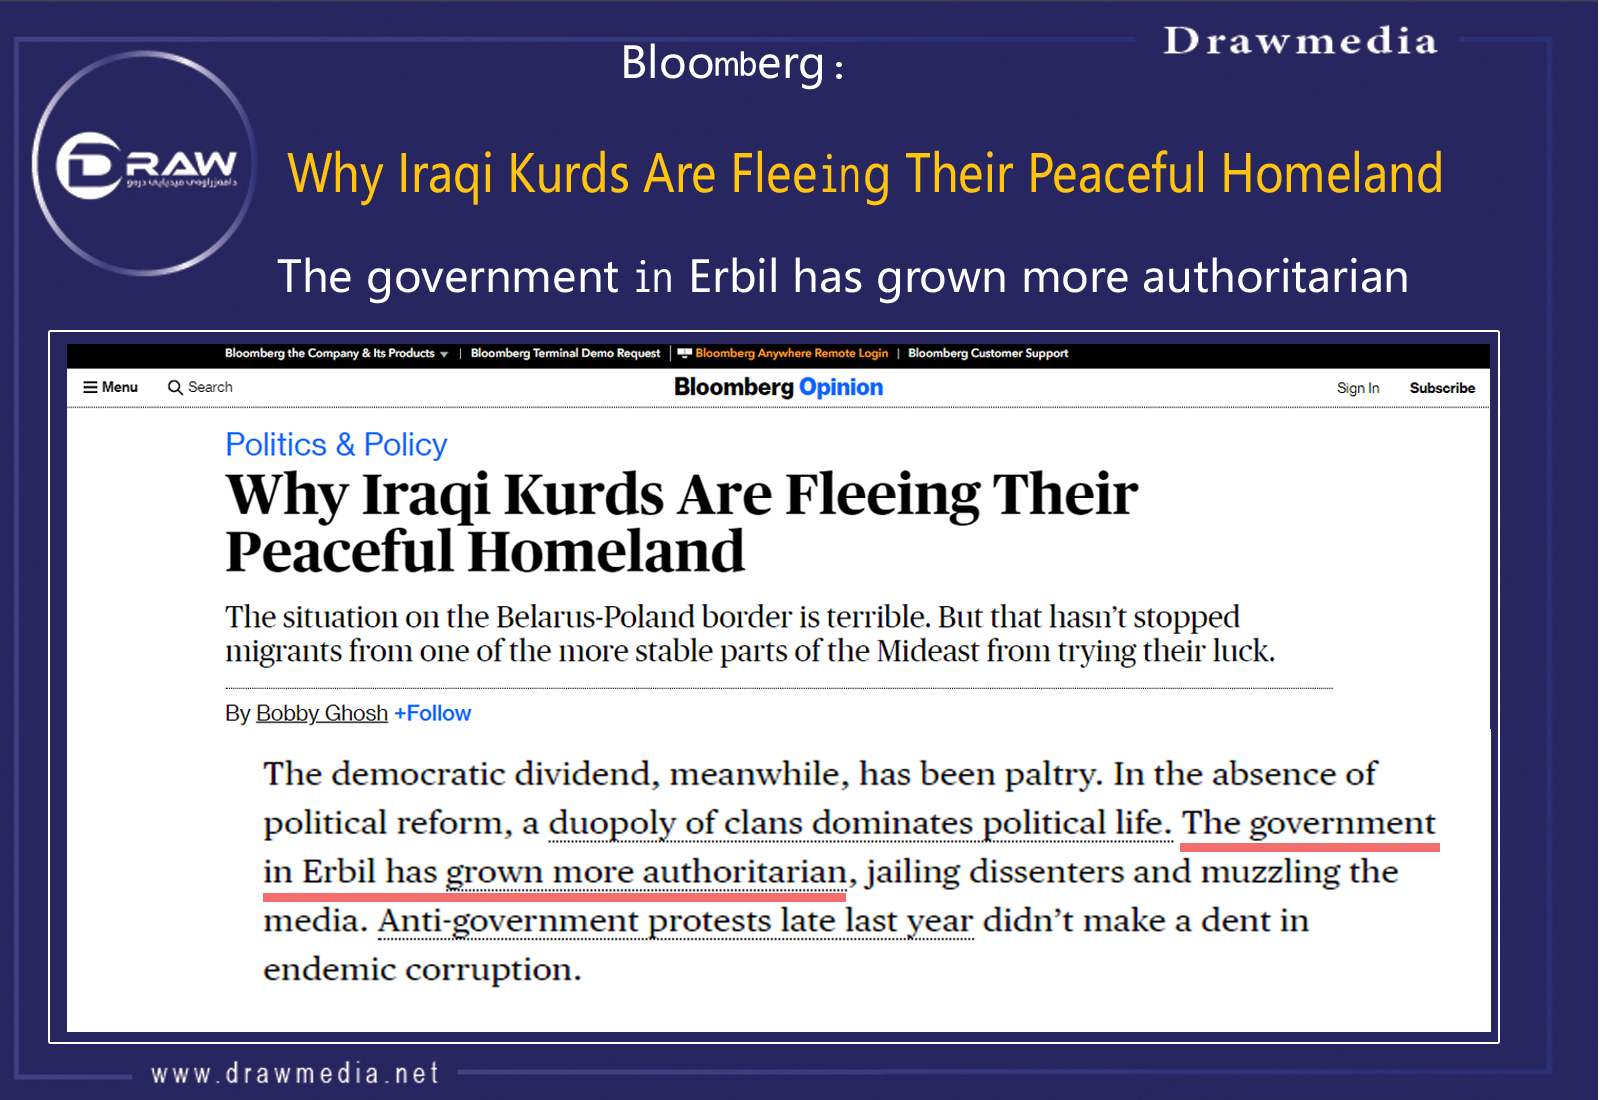 DrawMedia.net / Why Iraqi Kurds Are Fleeing Their Peaceful Homeland